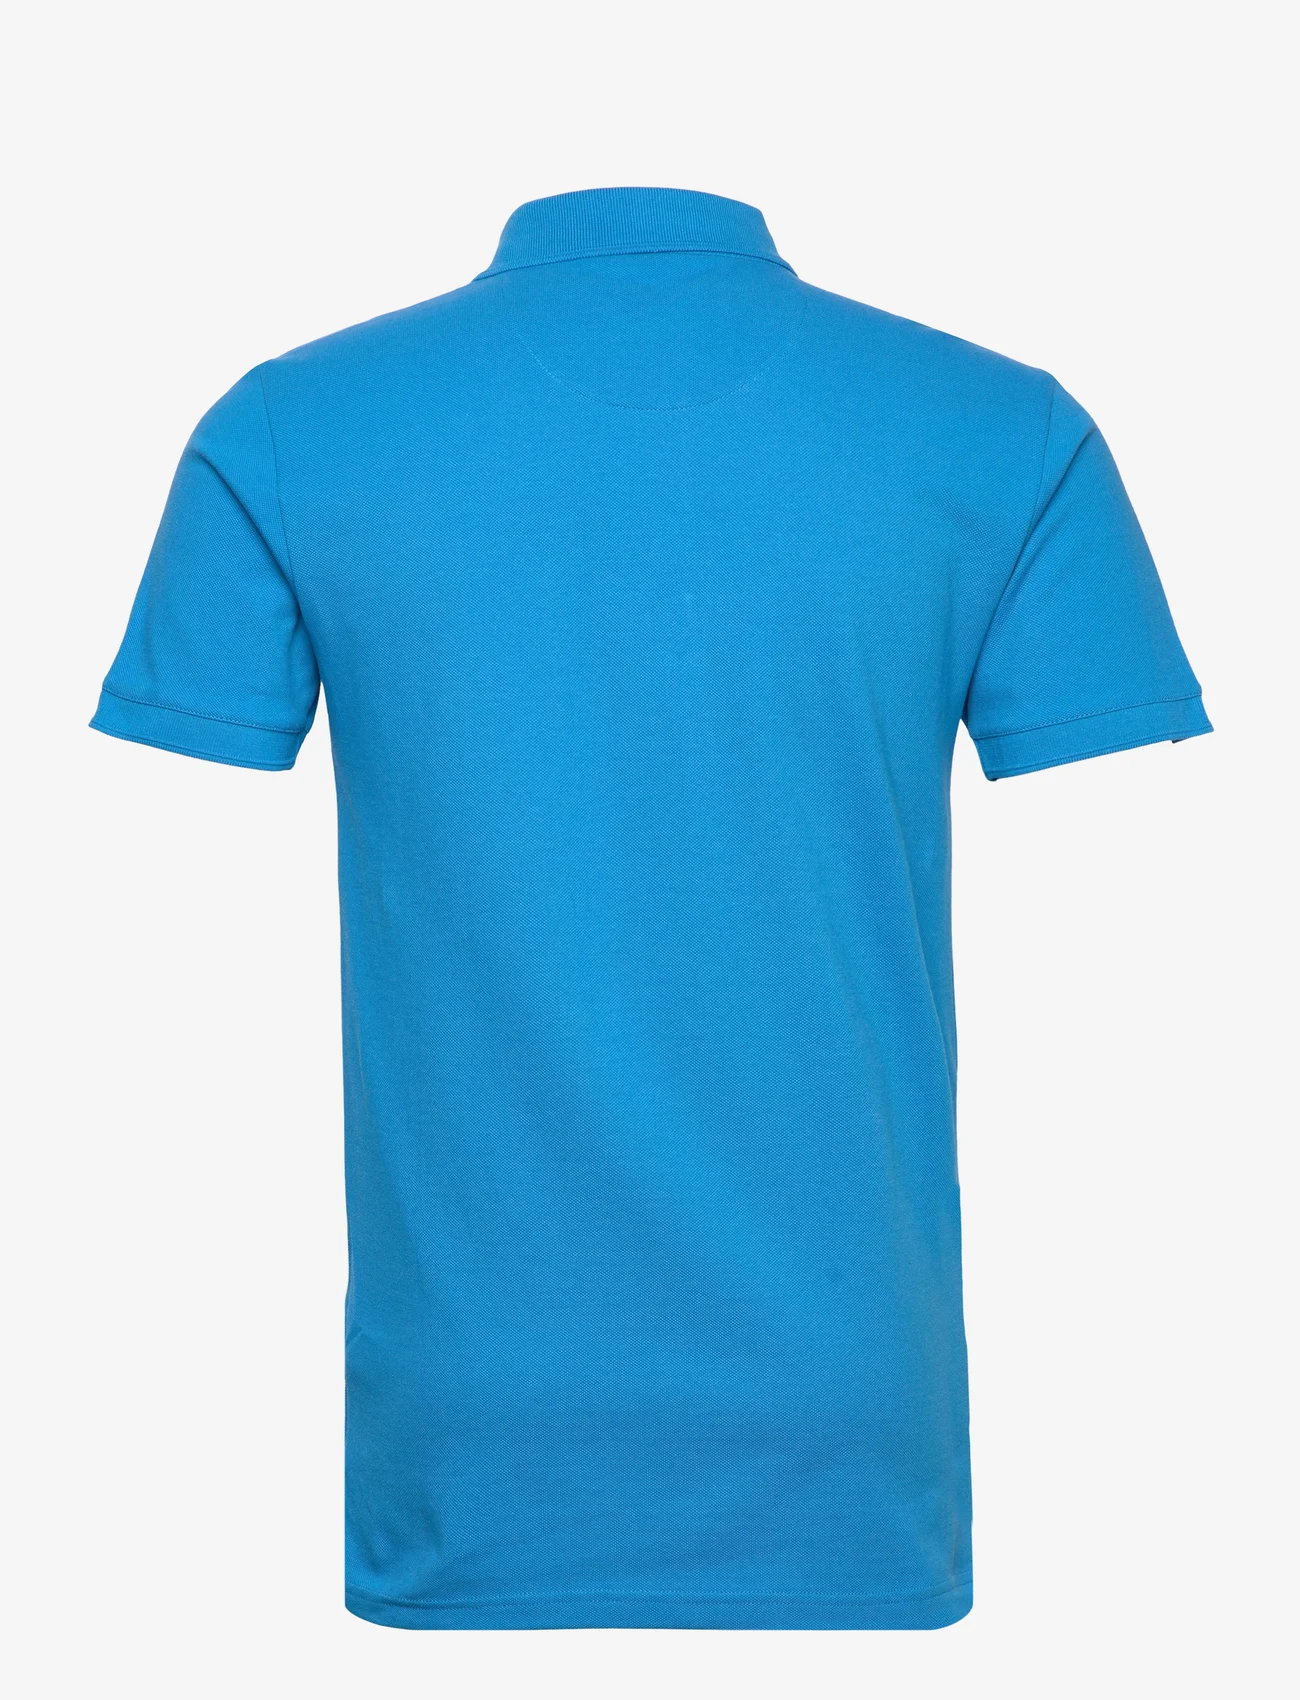 Armor Lux - Polo-Shirt - lyhythihaiset - royal blue - 1